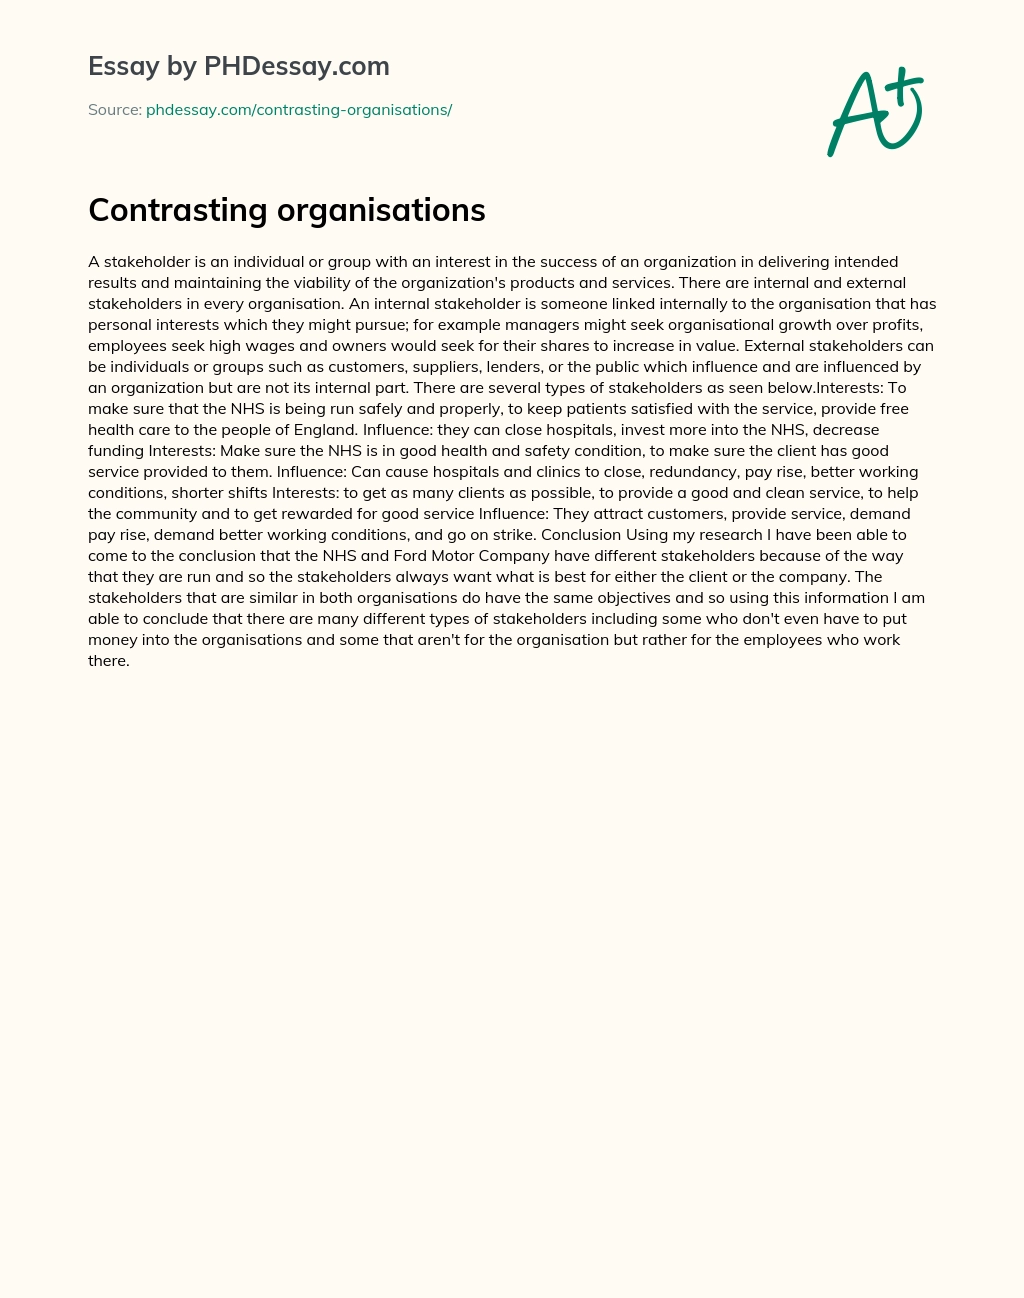 Contrasting organisations essay